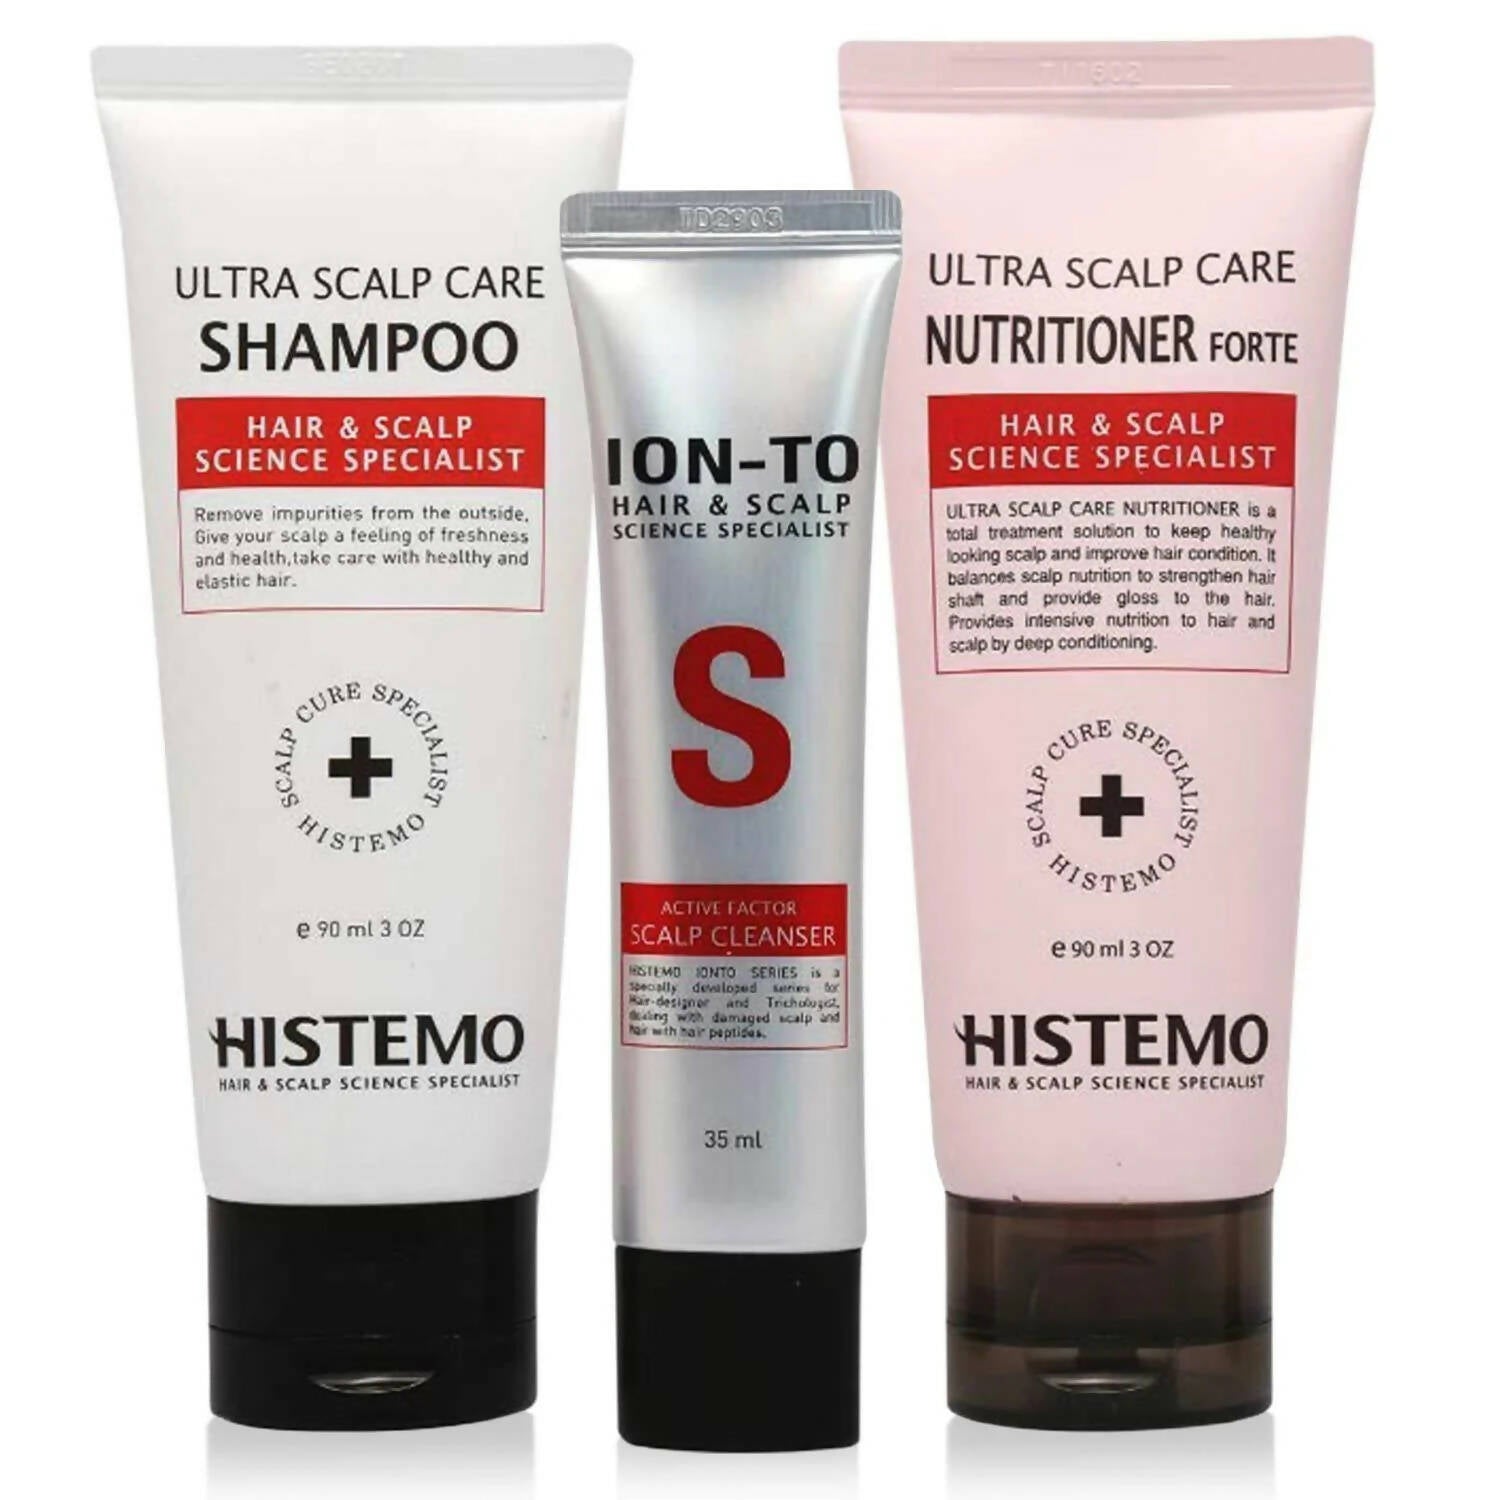 [SALE] Histemo Scalp Care & Hair Loss Prevention Kit w Scalp Detox Cleanser, Shampoo, Conditioner